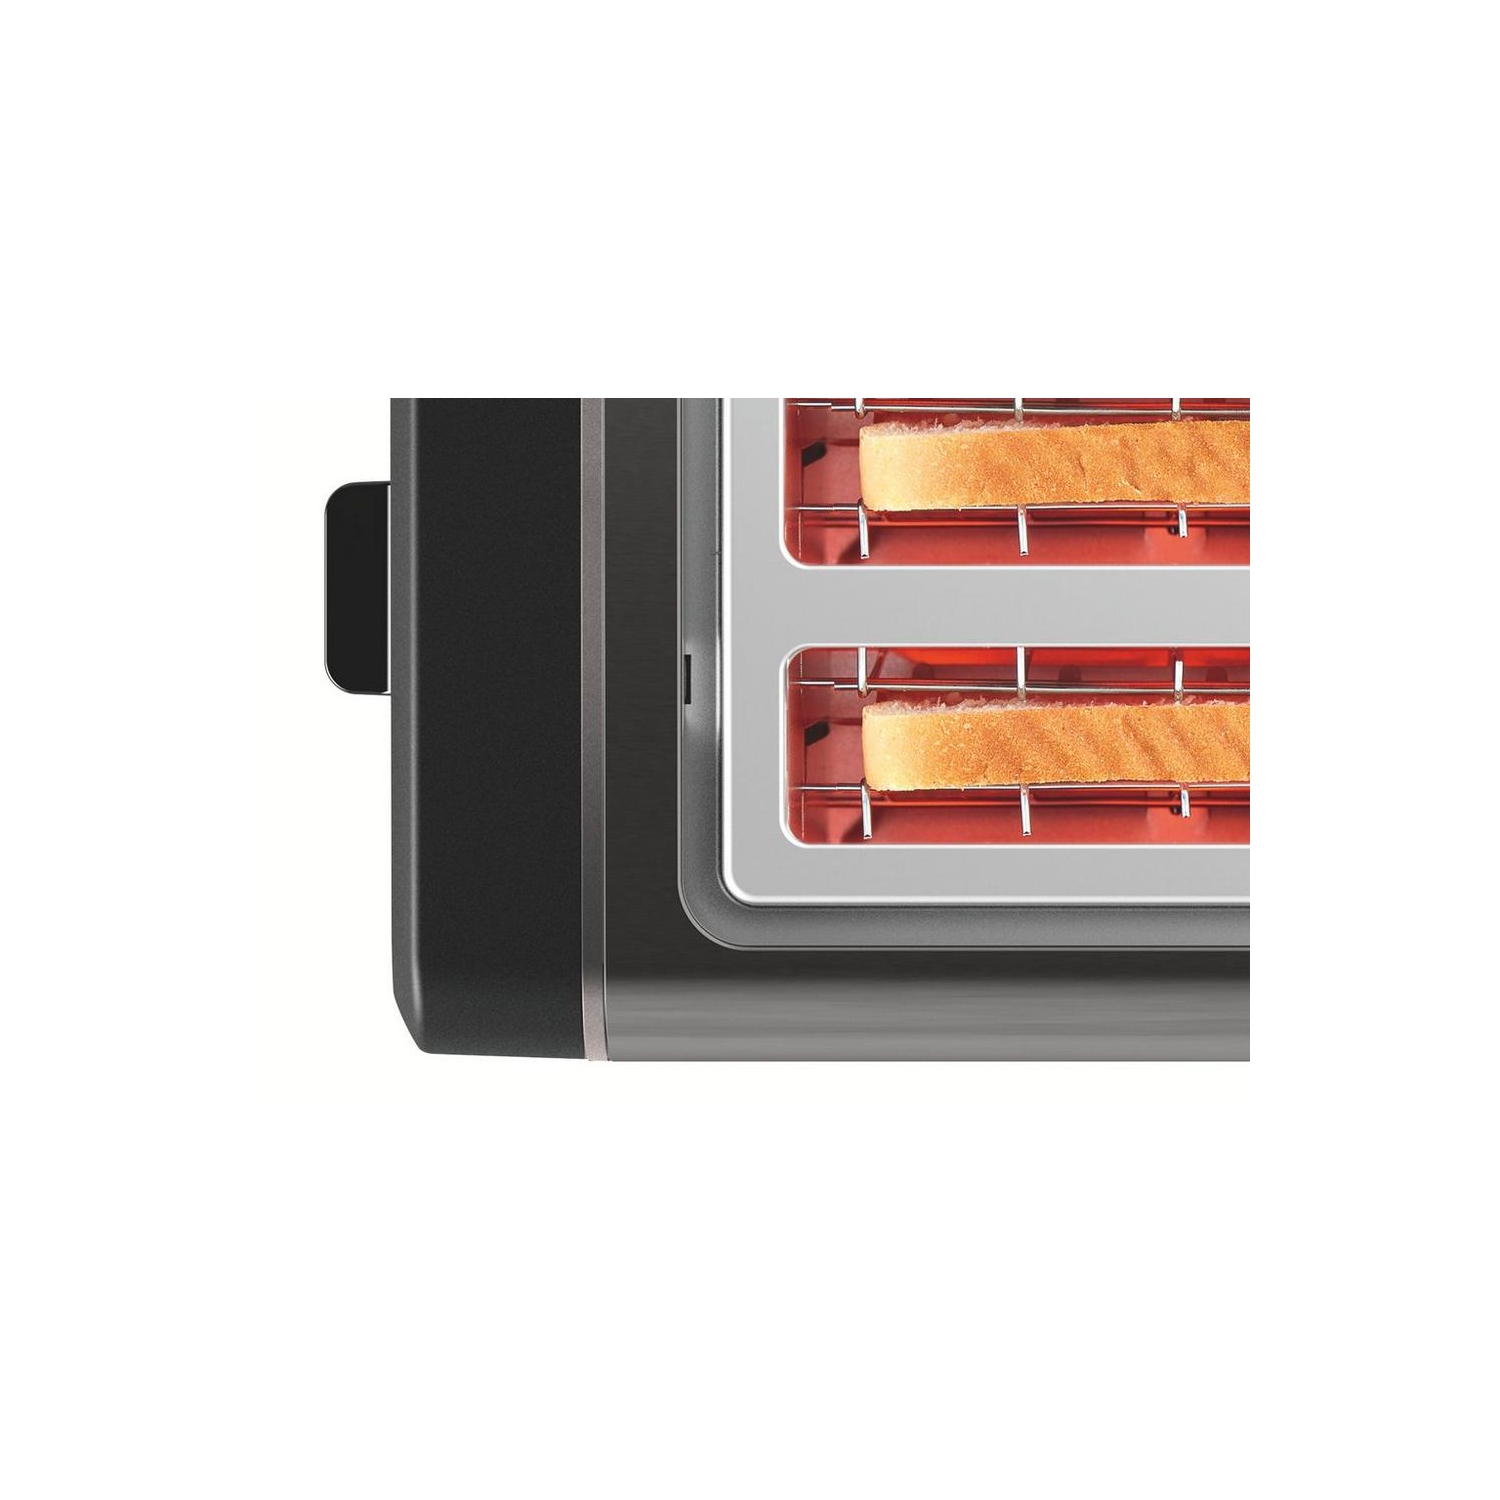 Bosch TAT5P445GB 4 Slice Toaster - Anthracite' Energy Efficient Toasting - 4